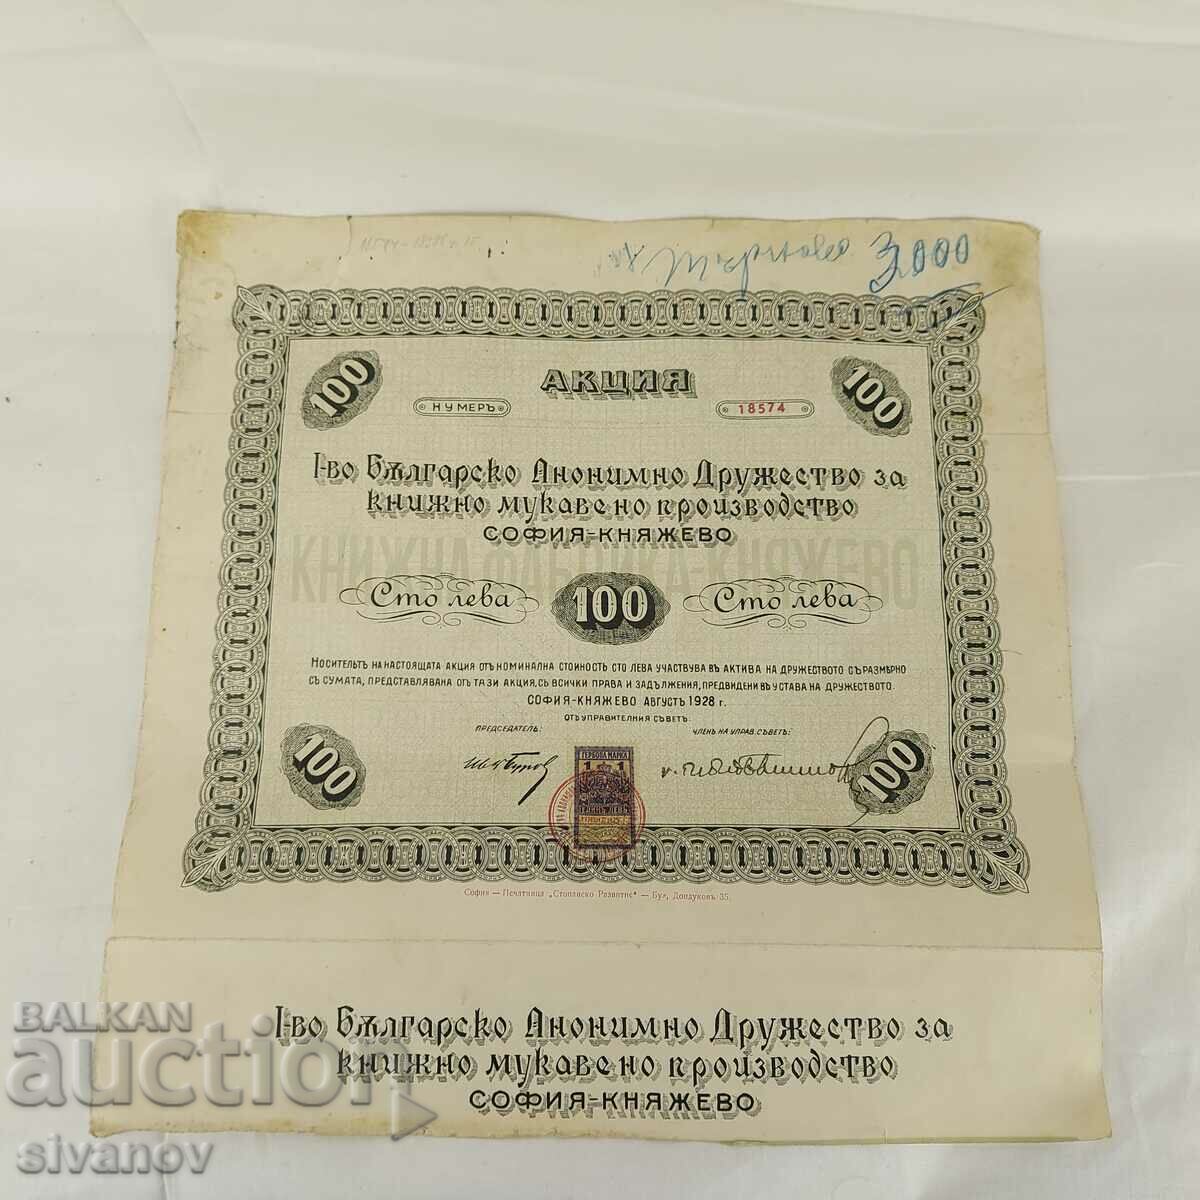 Acțiune 100 BGN Carte Mukaveno Production Knyazhevo №1594